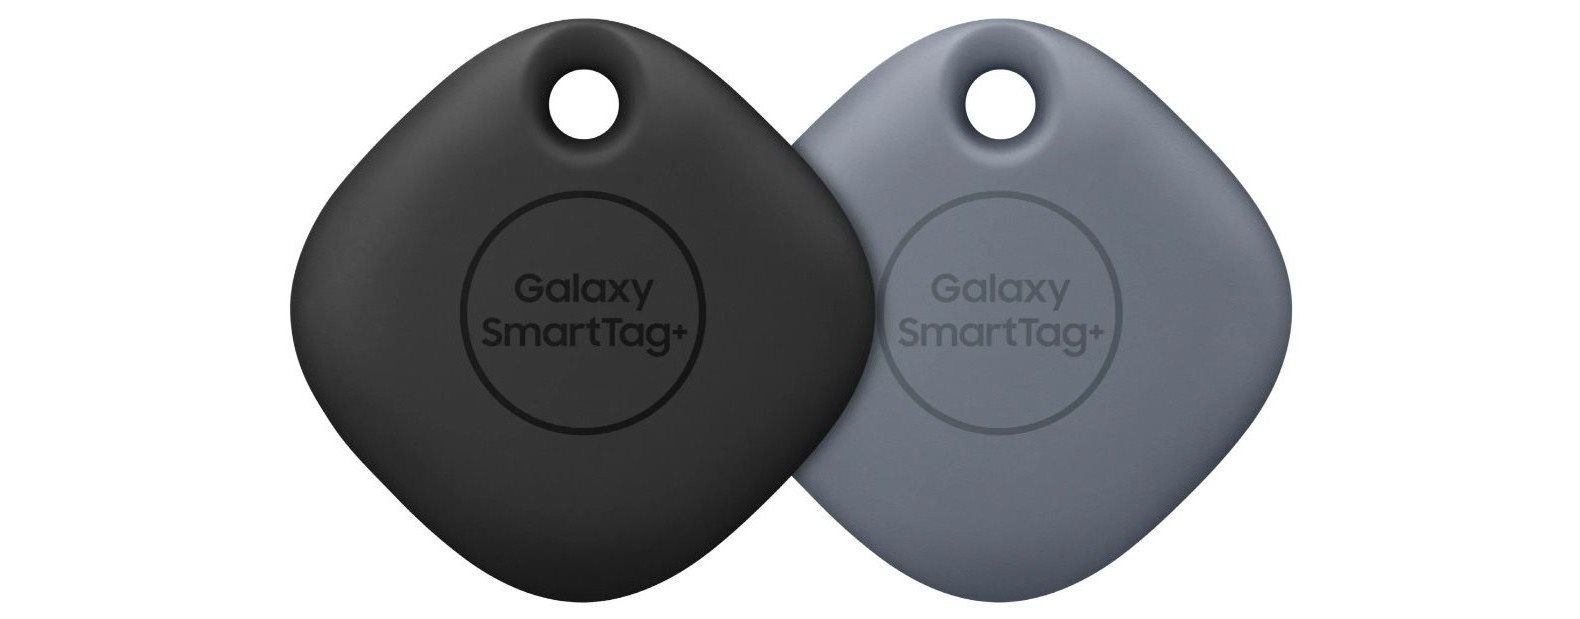 Apple AirTag, konkurencia Samsung Galaxy SmartTag+